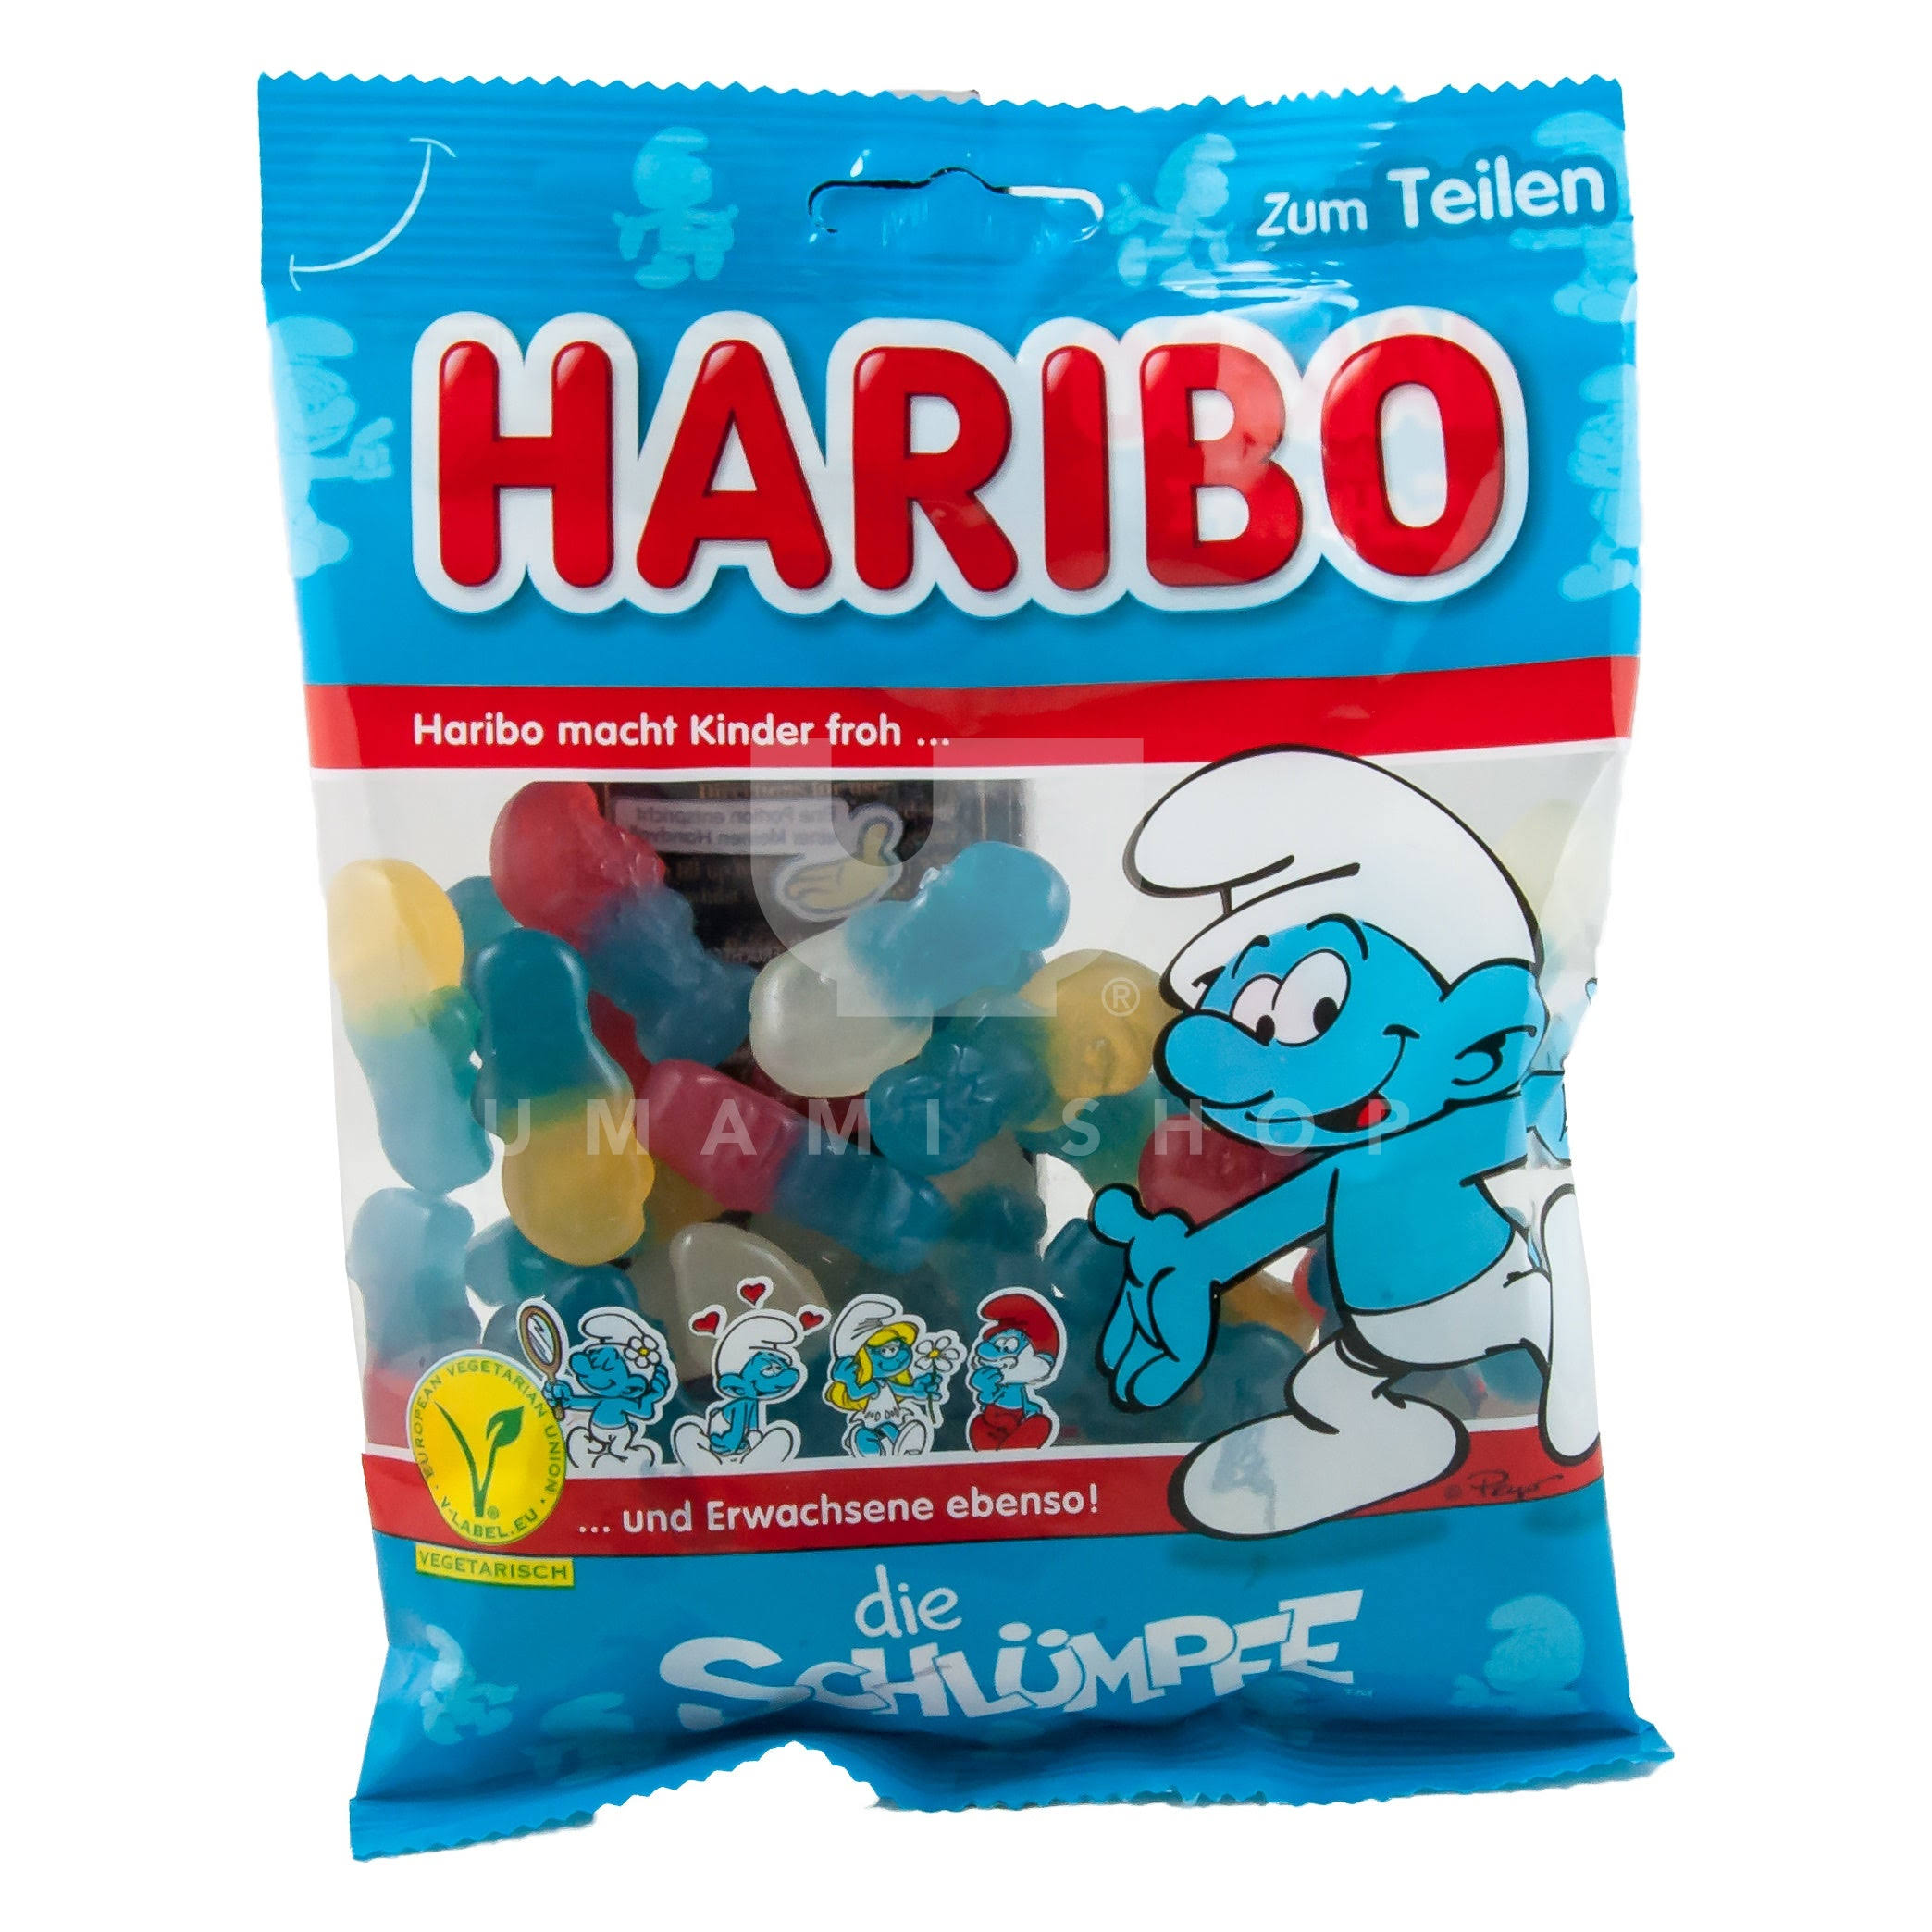 Haribo The Smurfs Gummi Candy - 200g